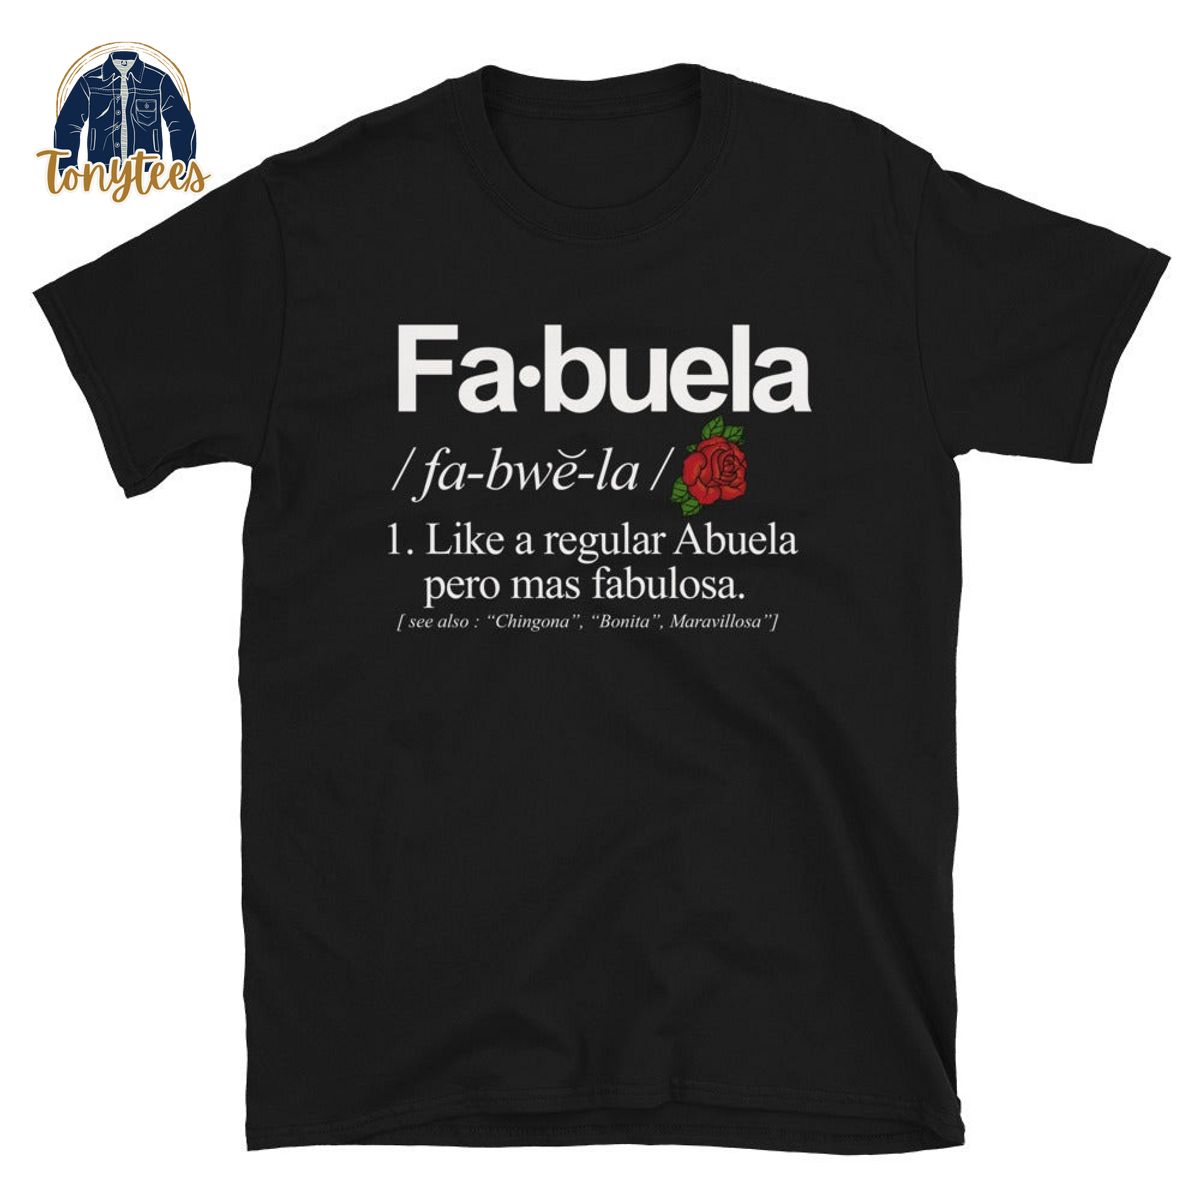 Fabuela definition like a regular Abuela pero mas fabulosa shirt